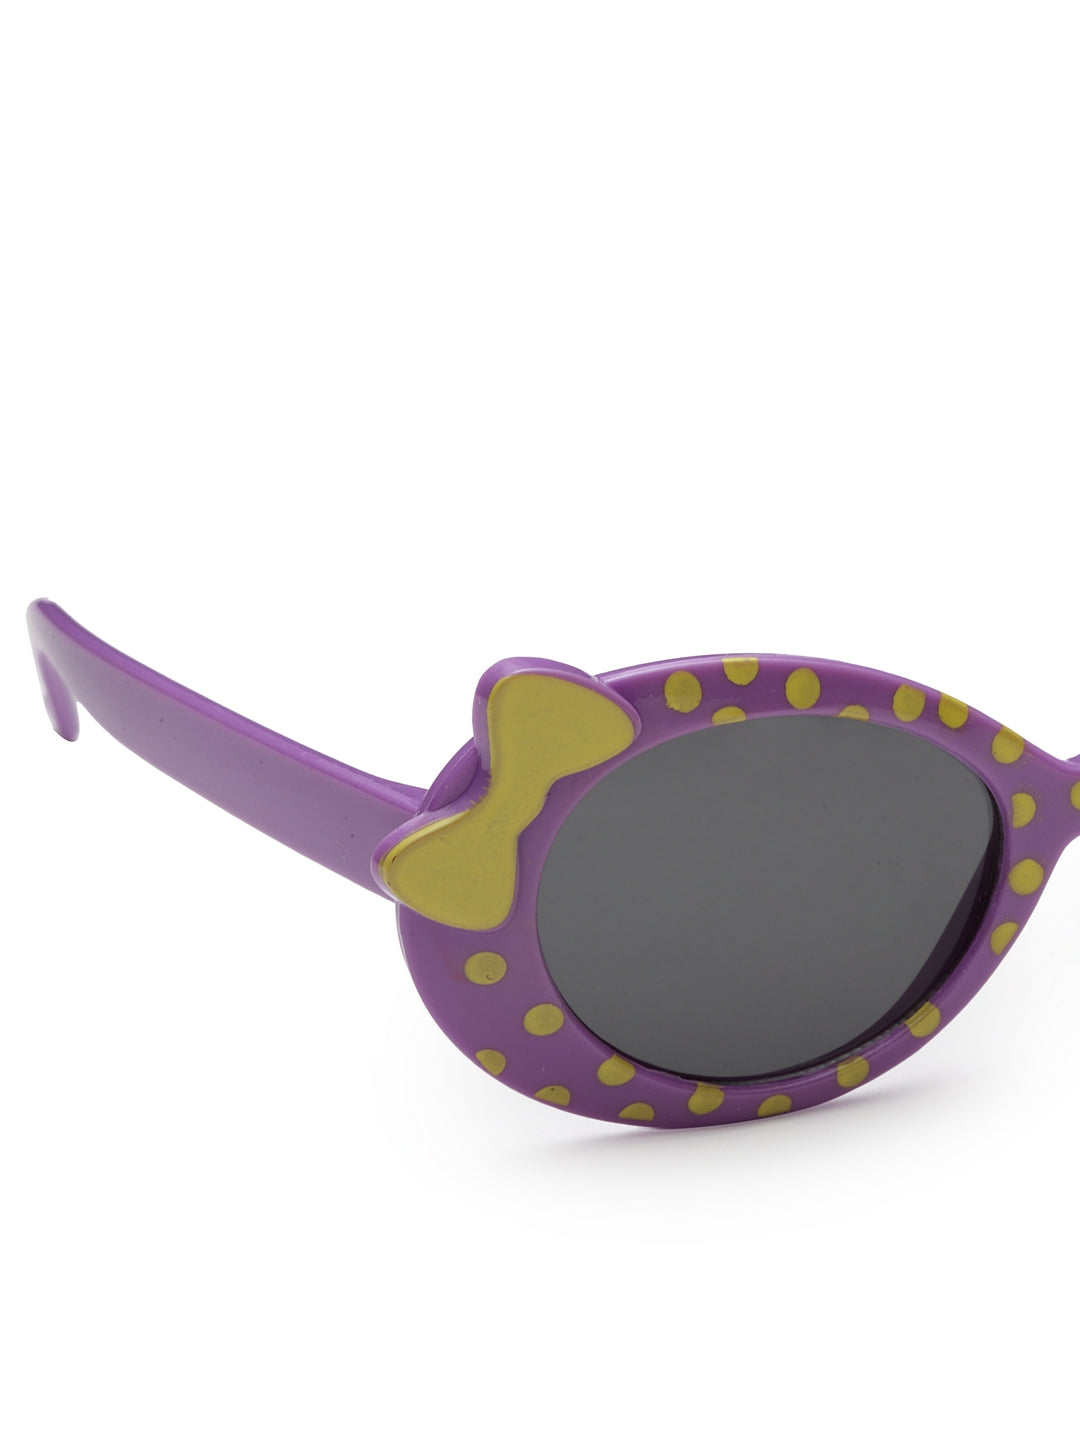 Stol'n Premium Attractive Fashionable UV-Protected Cat Eye Sunglasses - Purple